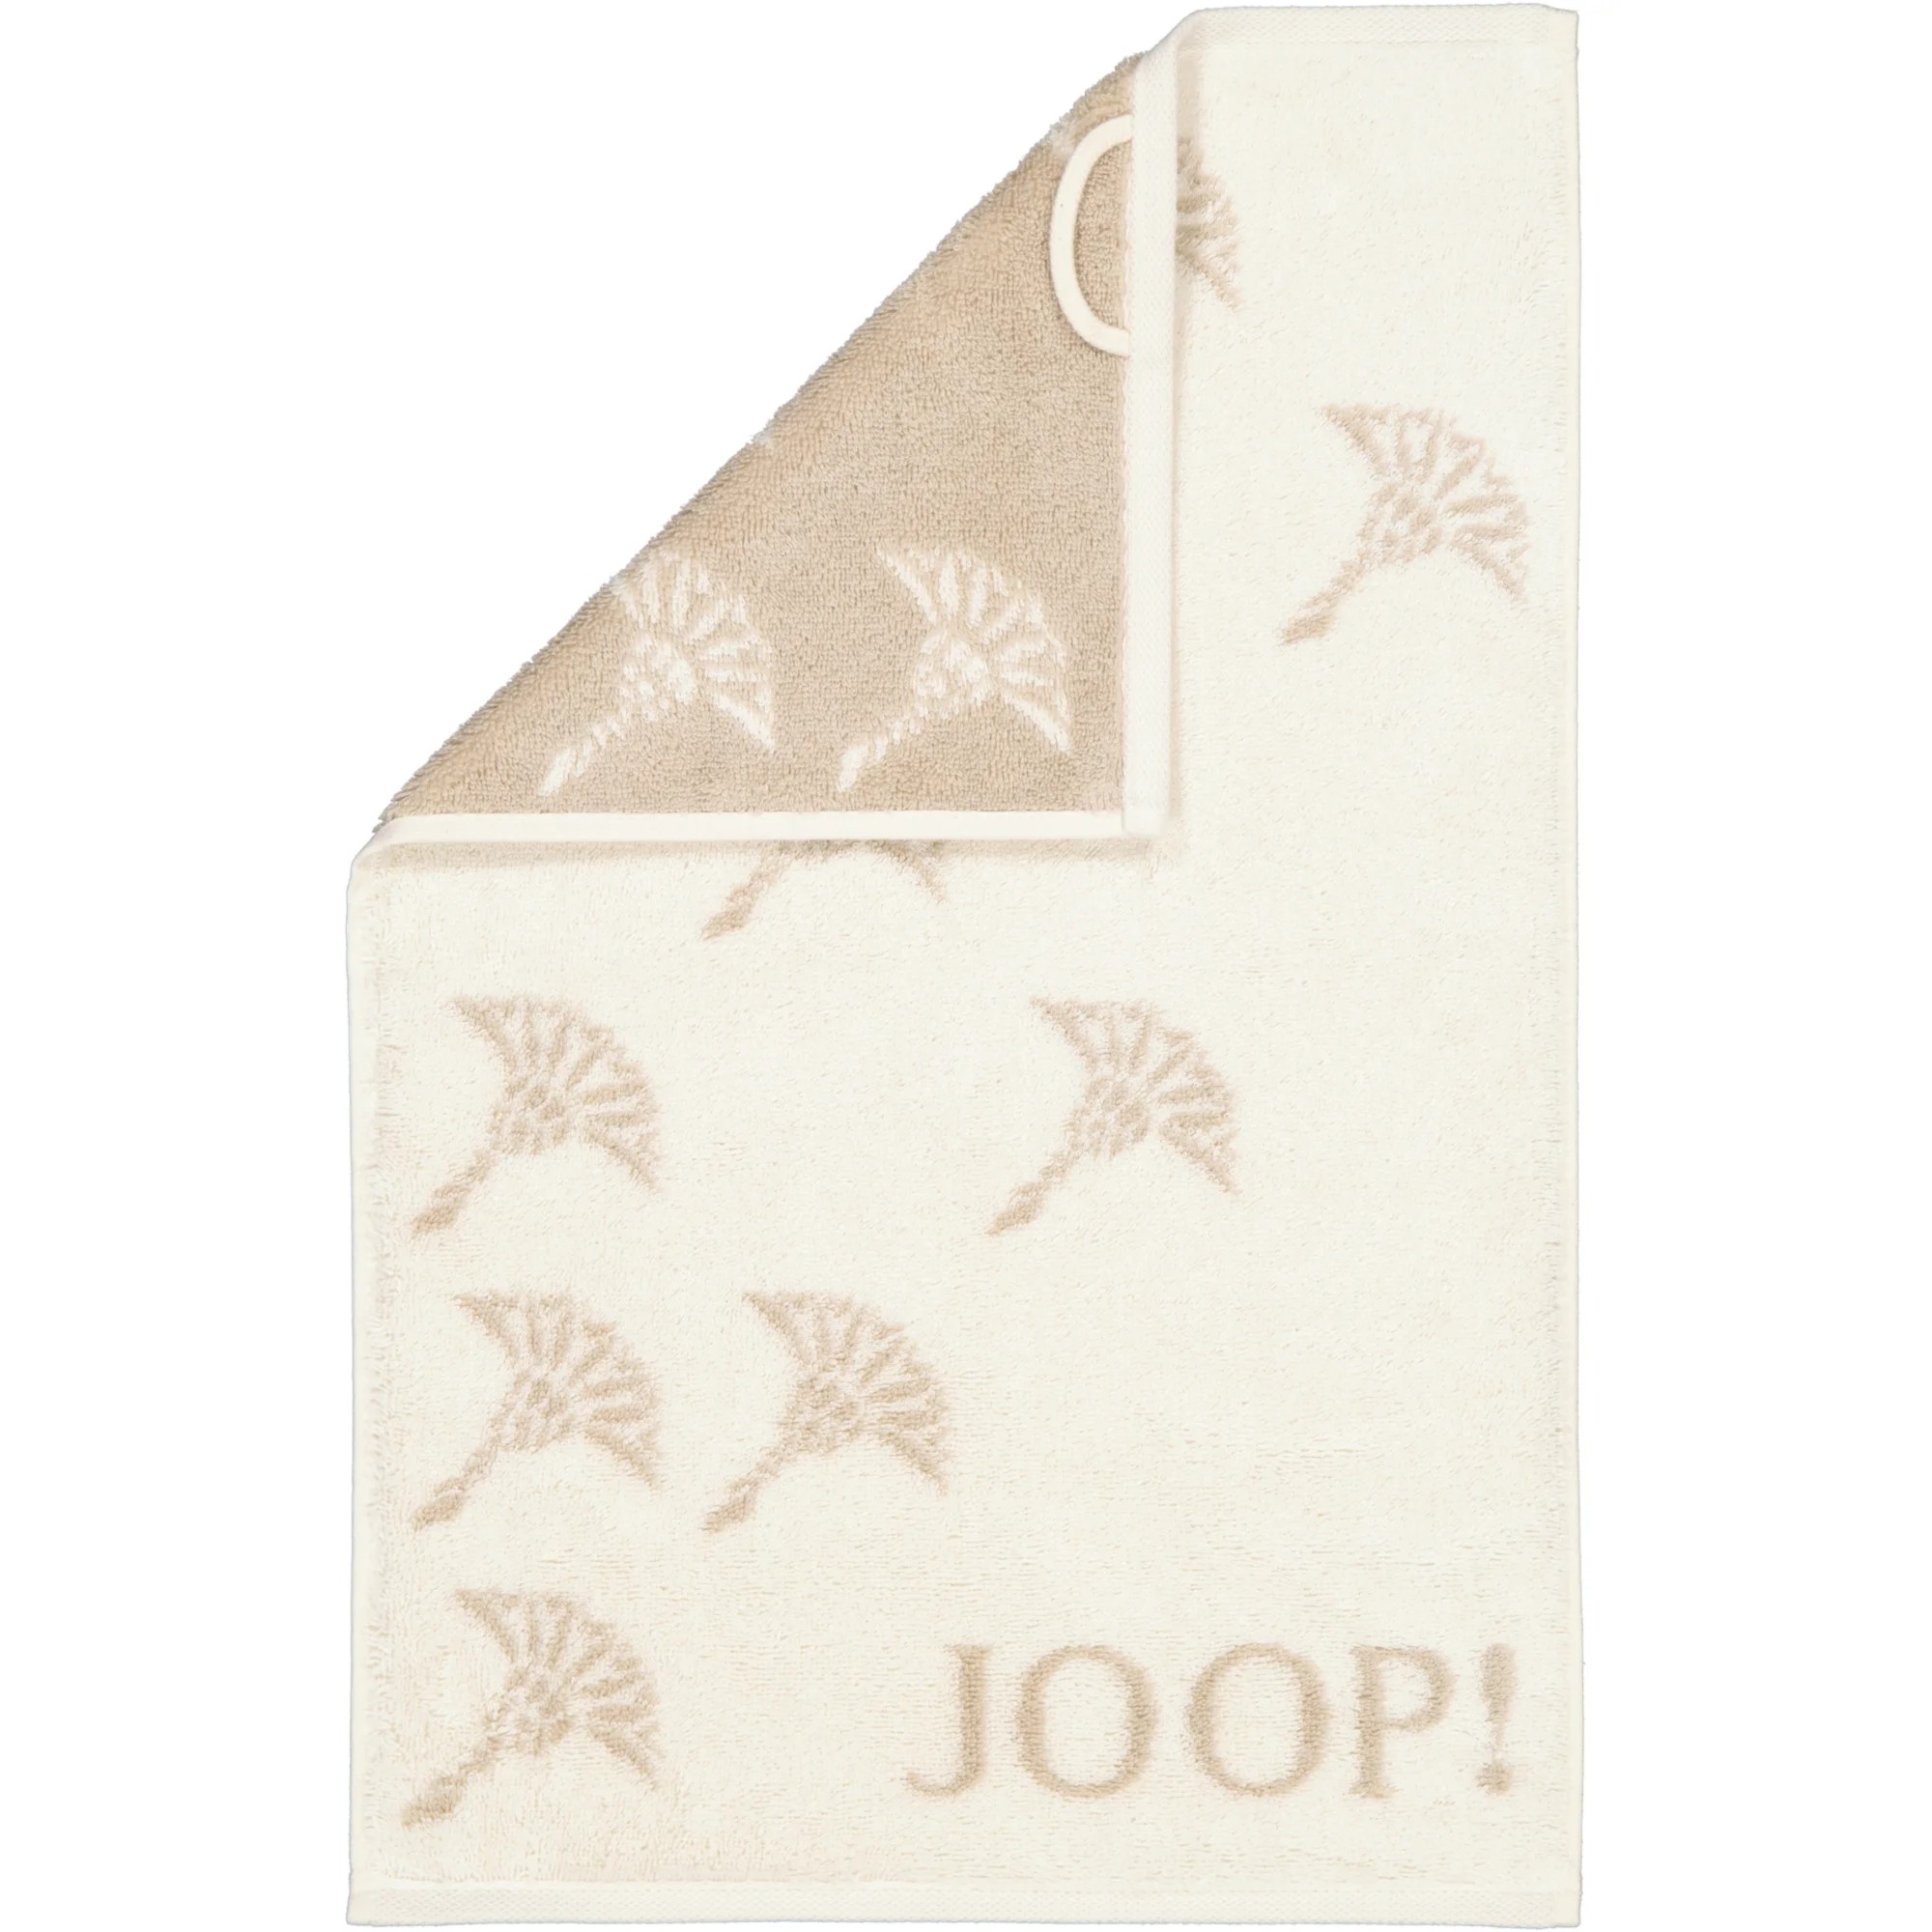 JOOP客用毛巾细节图2